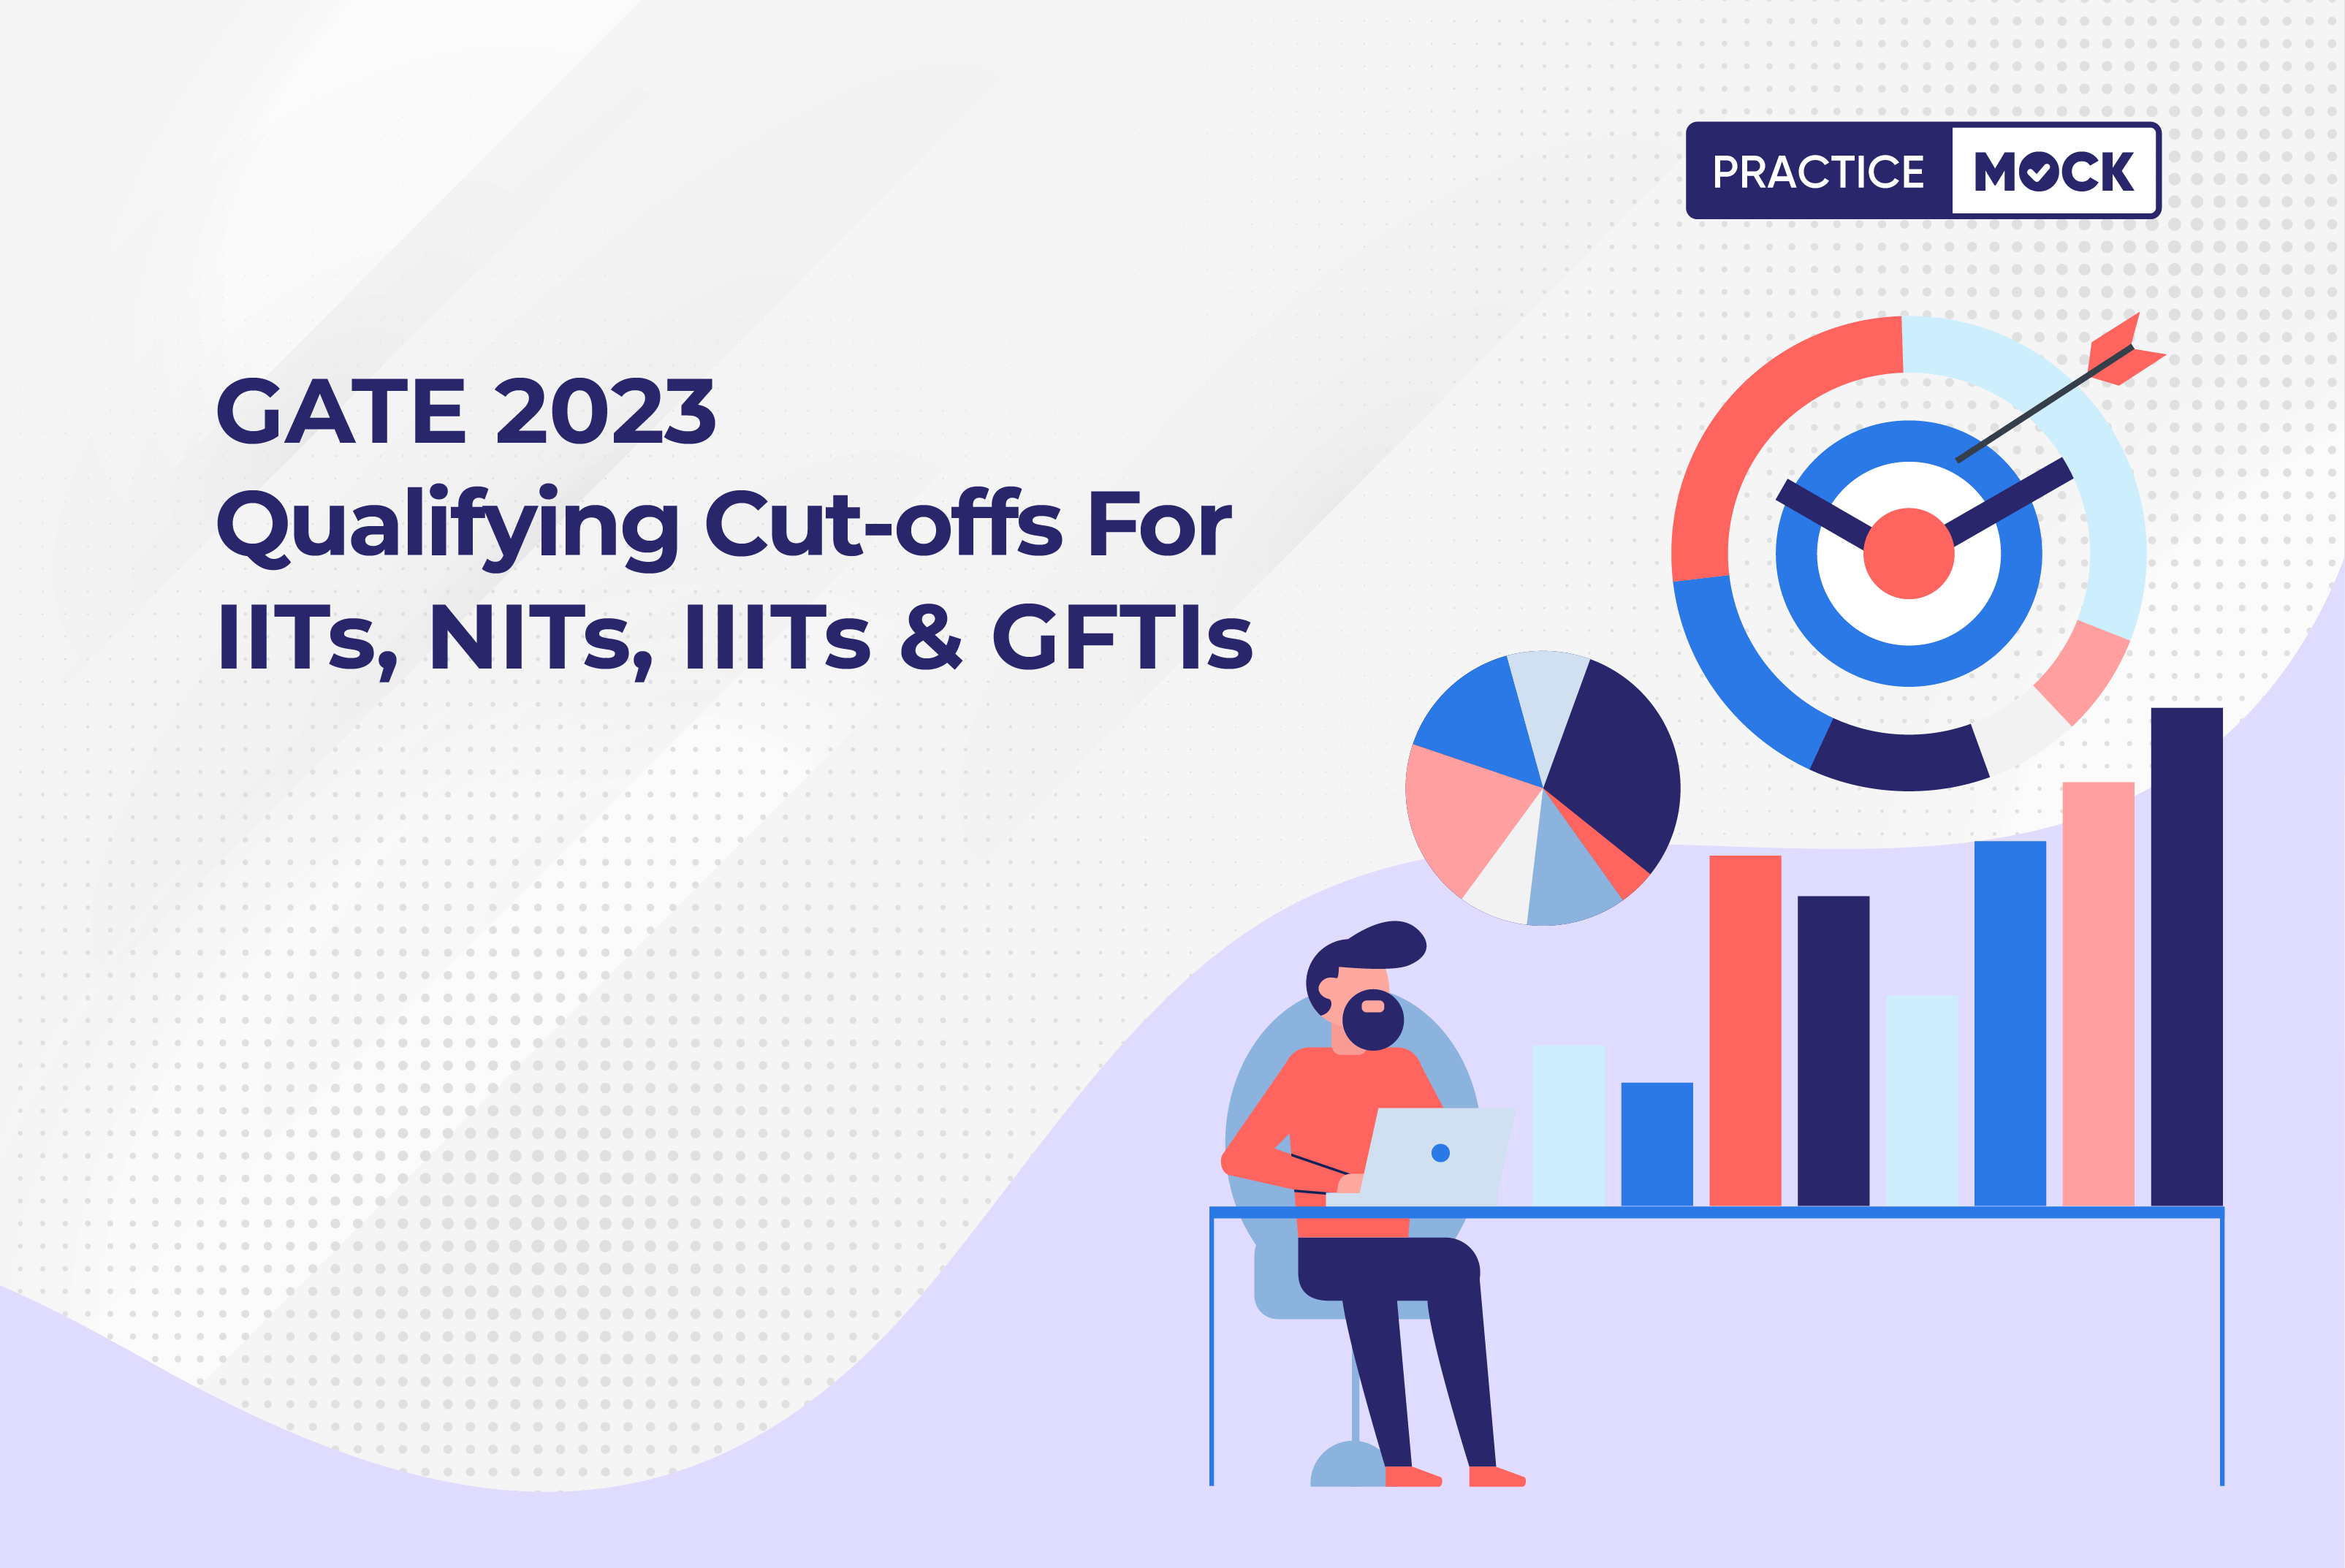 GATE 2023 Qualifying Cutoffs for IITs, NITs, IIITs & GFTIs PracticeMock